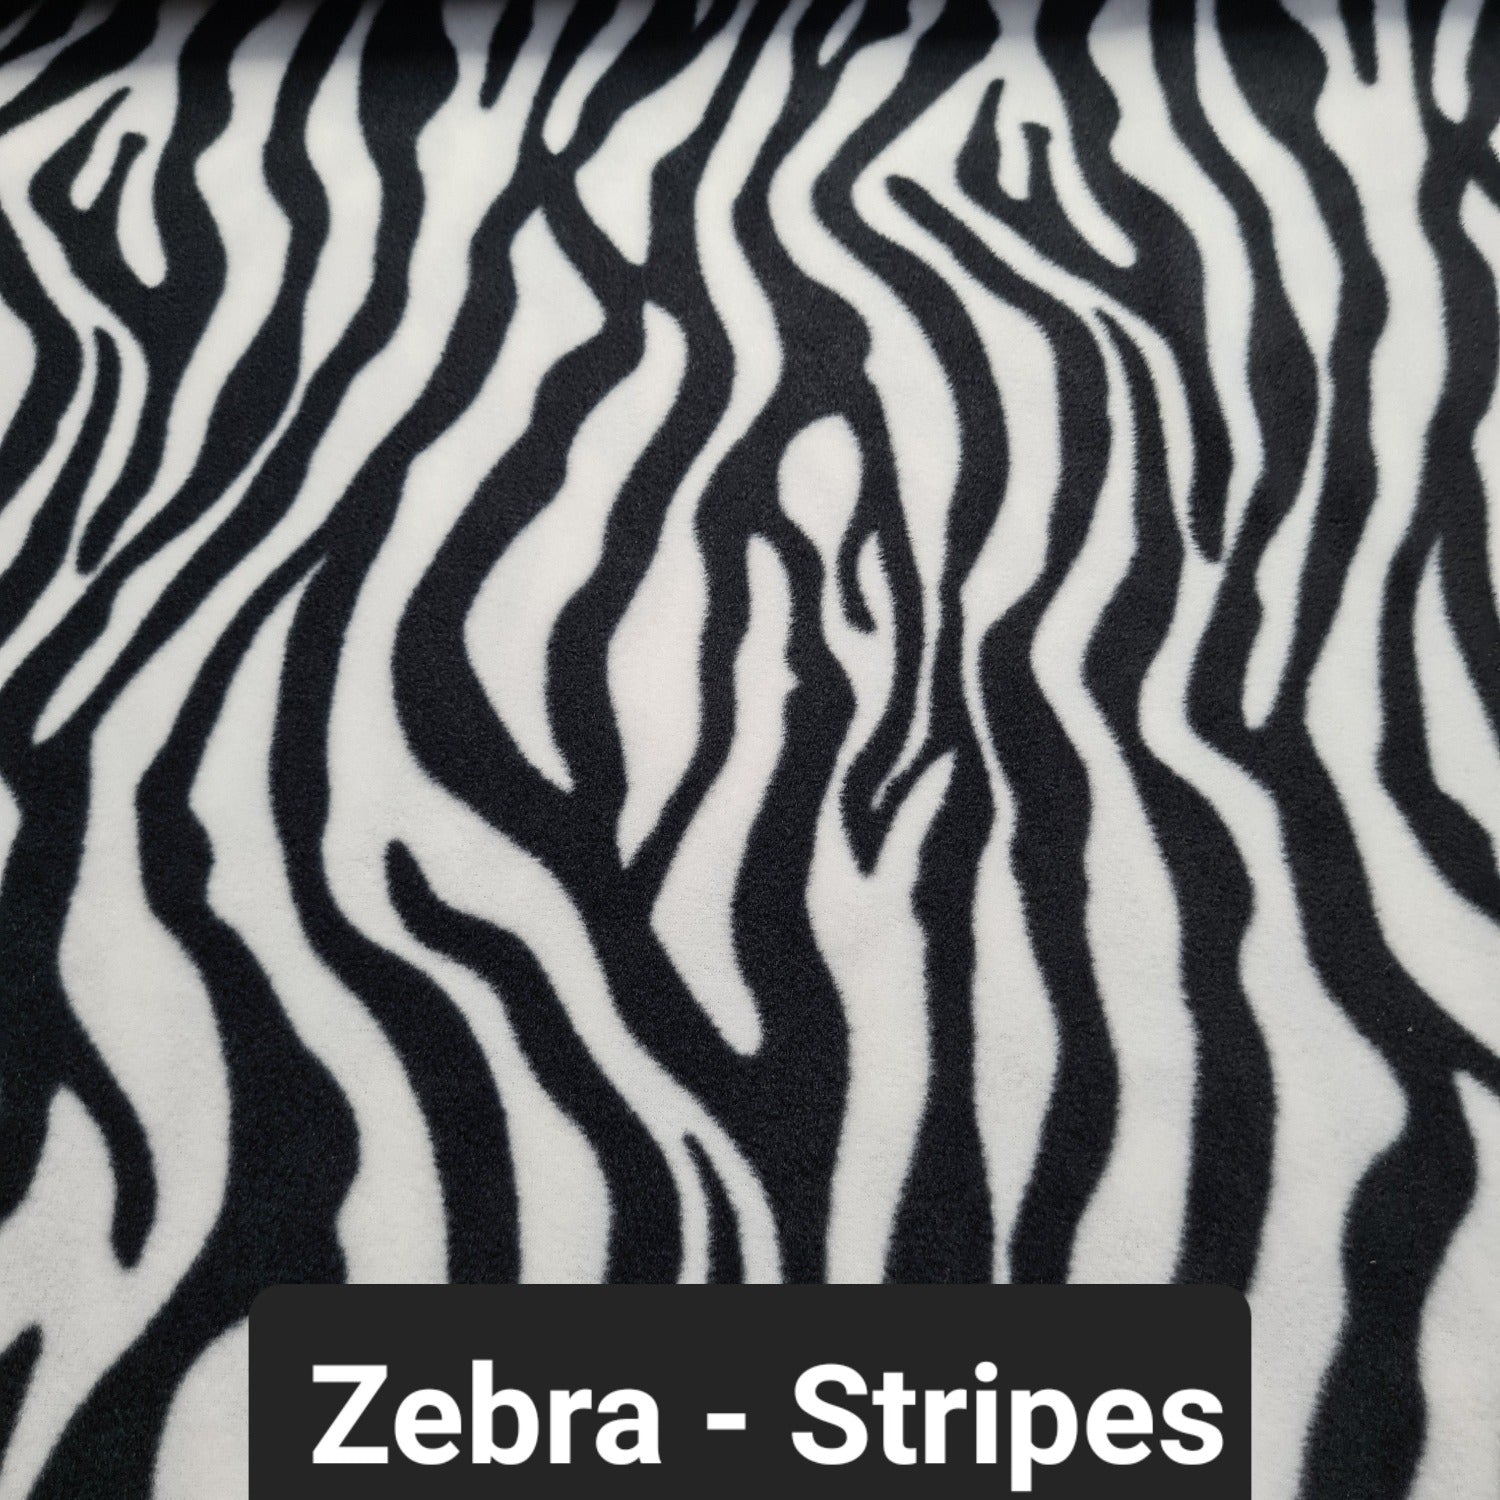 Zebra stripe printed polar fleece fabric